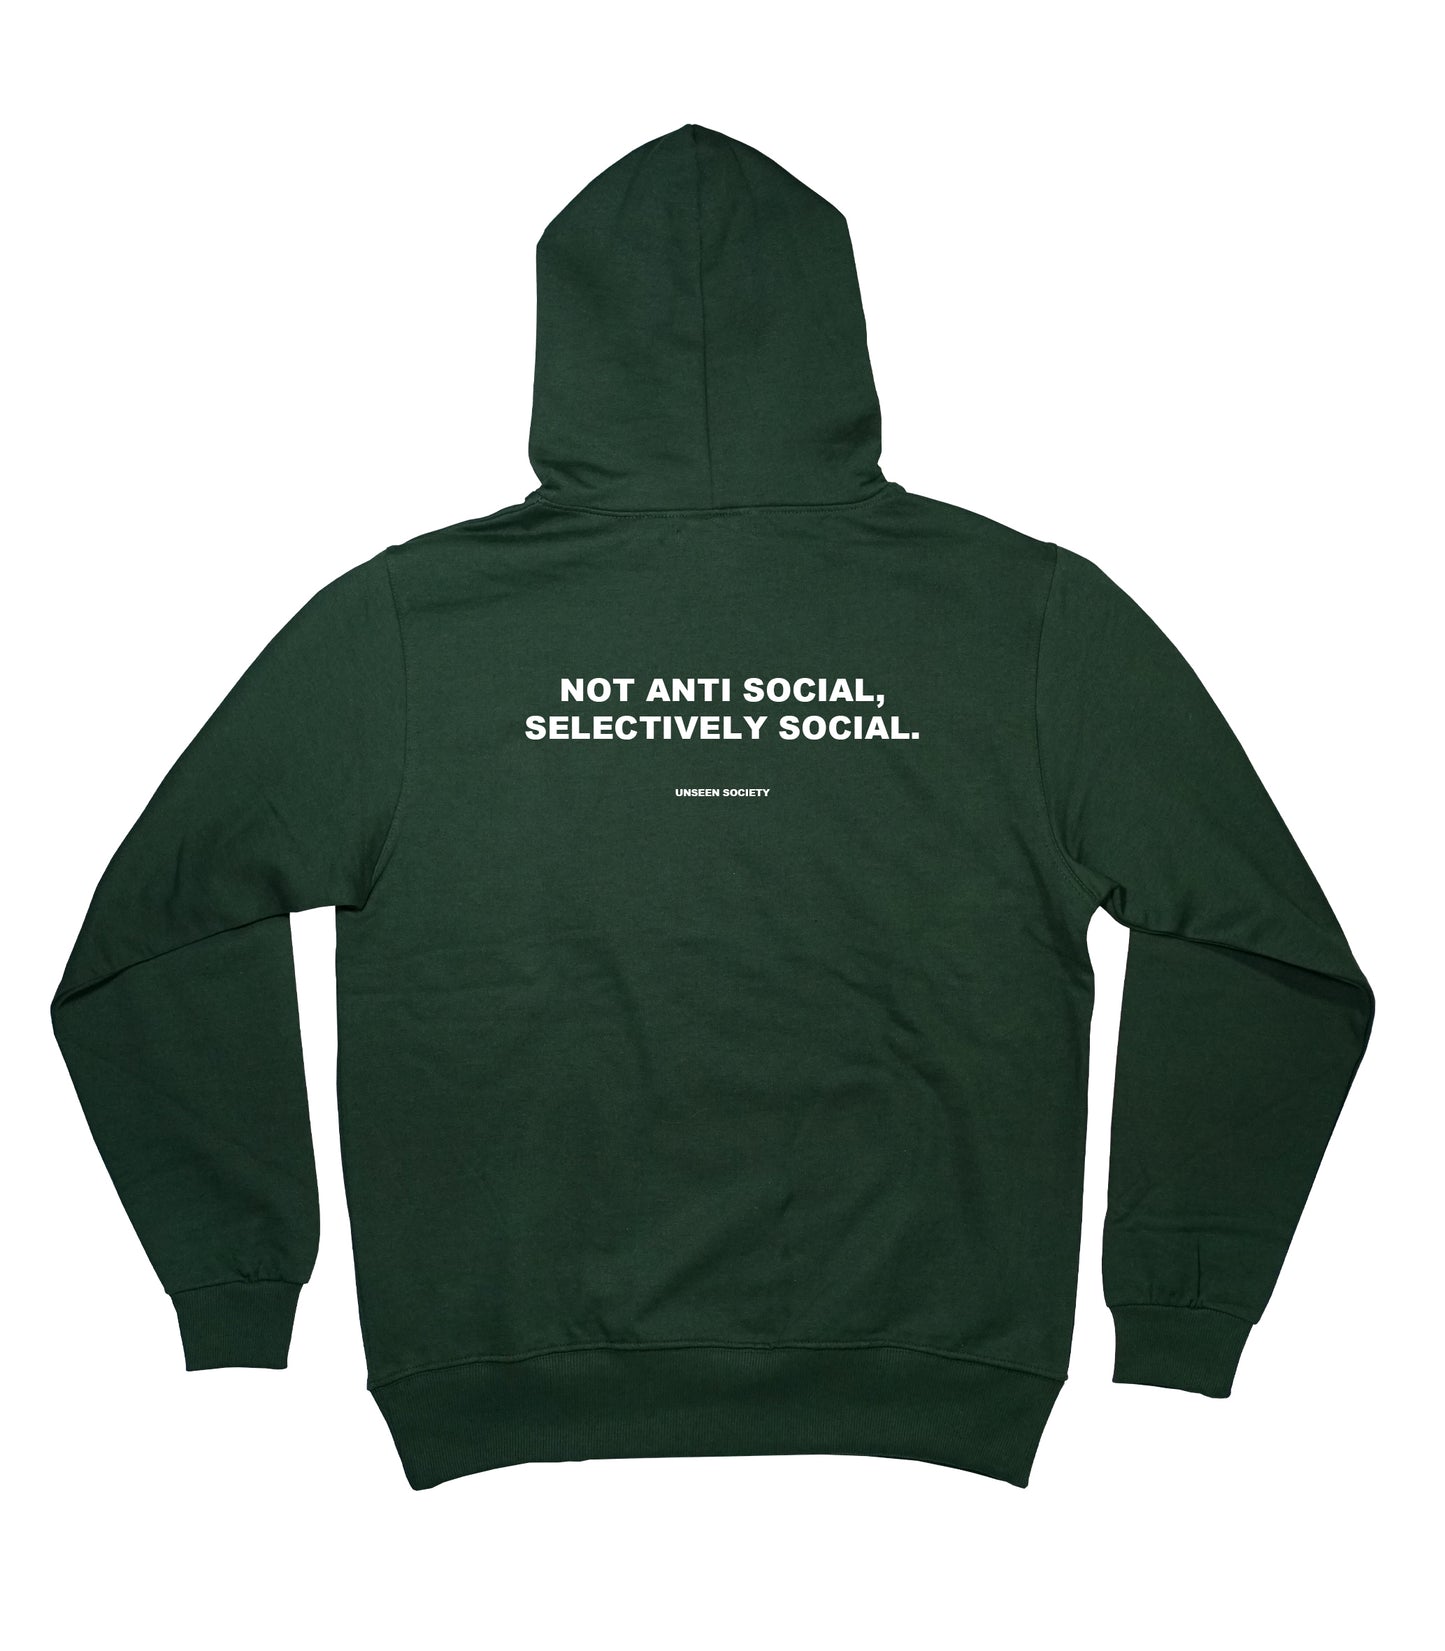 Not anti social quote hoodie